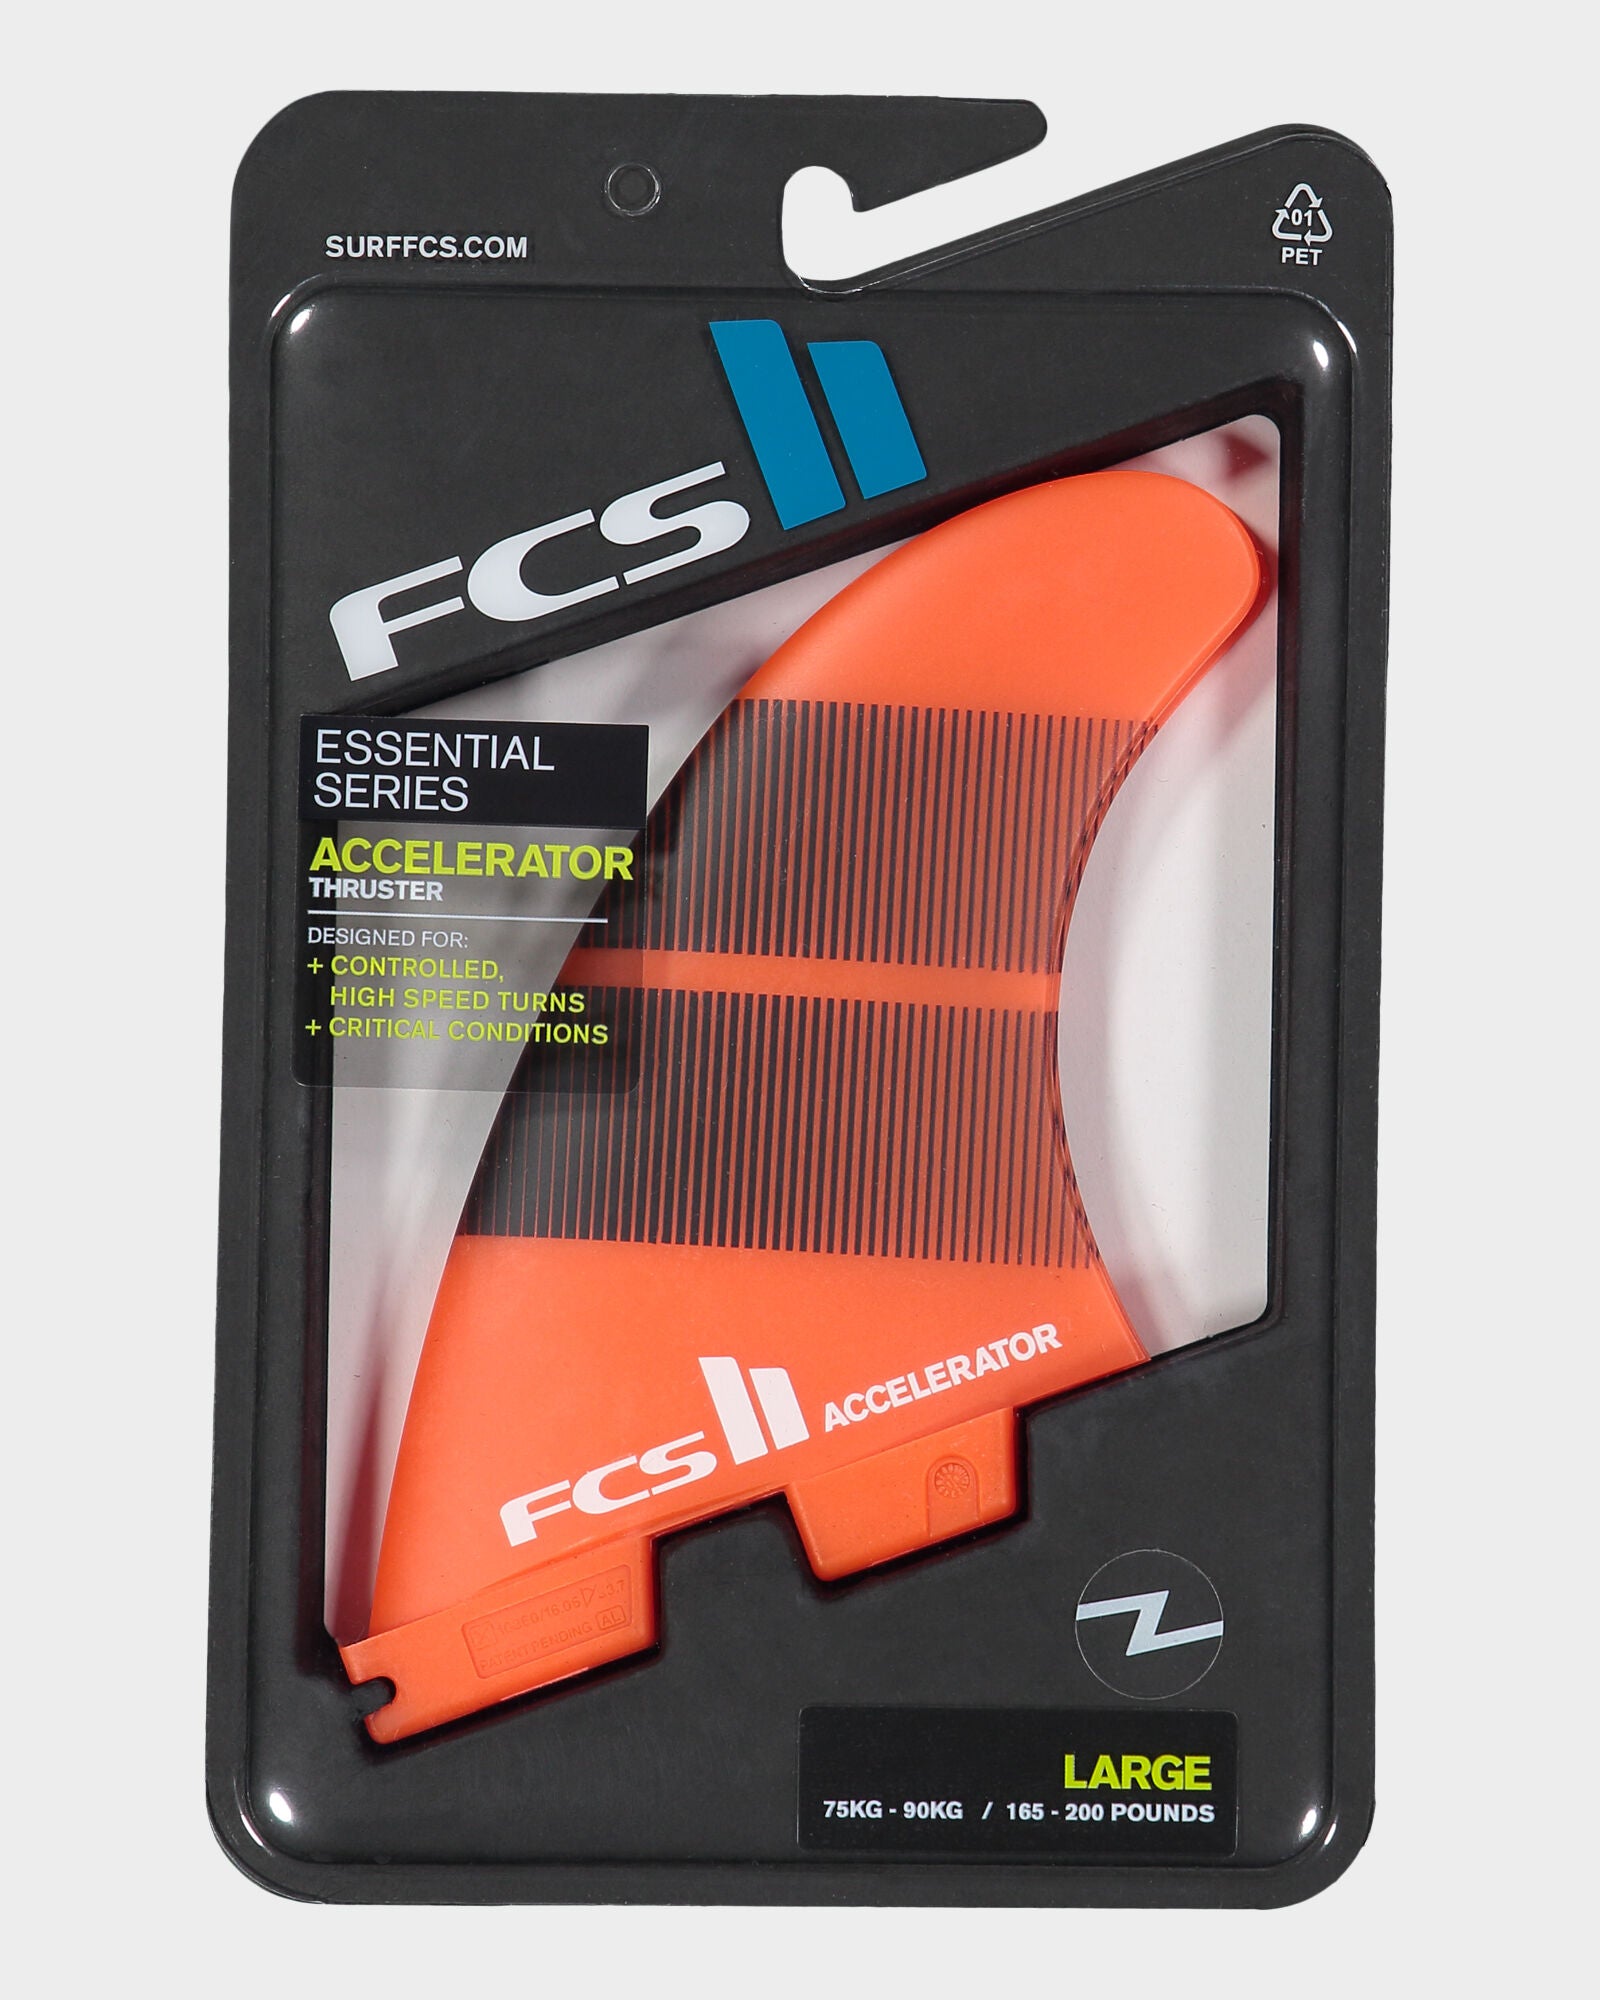 FCS II Accelerator Neo Glass - Quillas